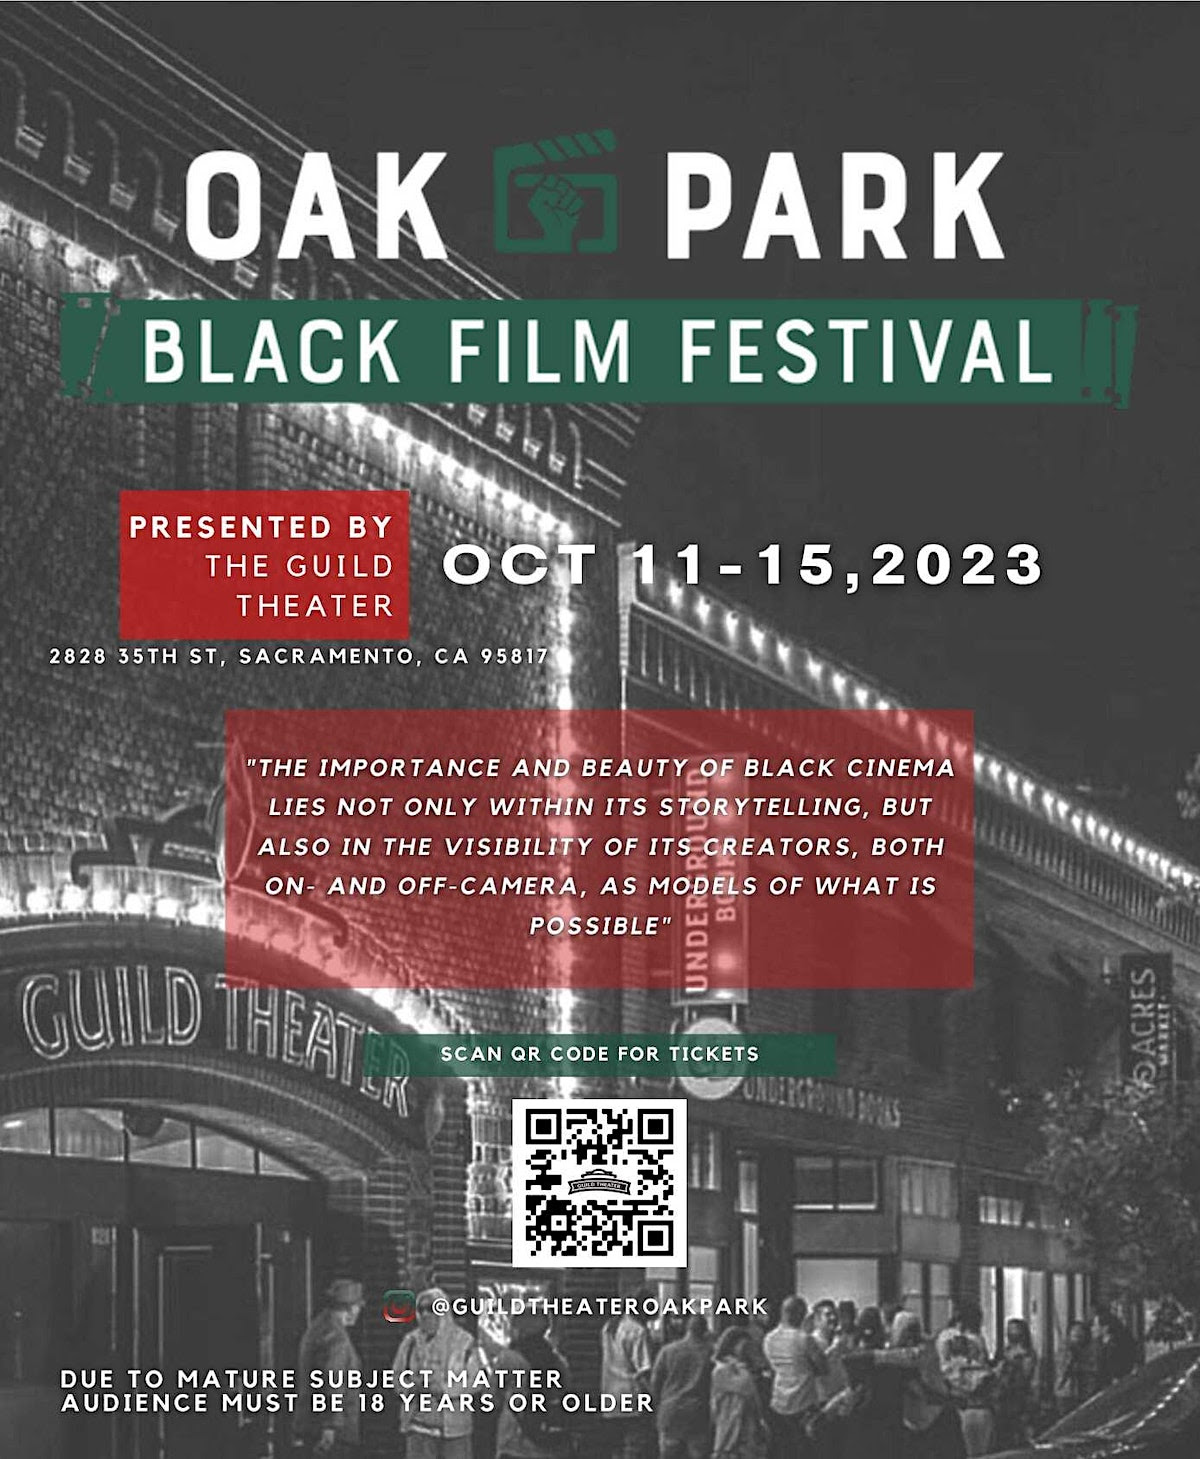 Oak-Park-Black-Film-Festival-Oct-11-15-2023 image